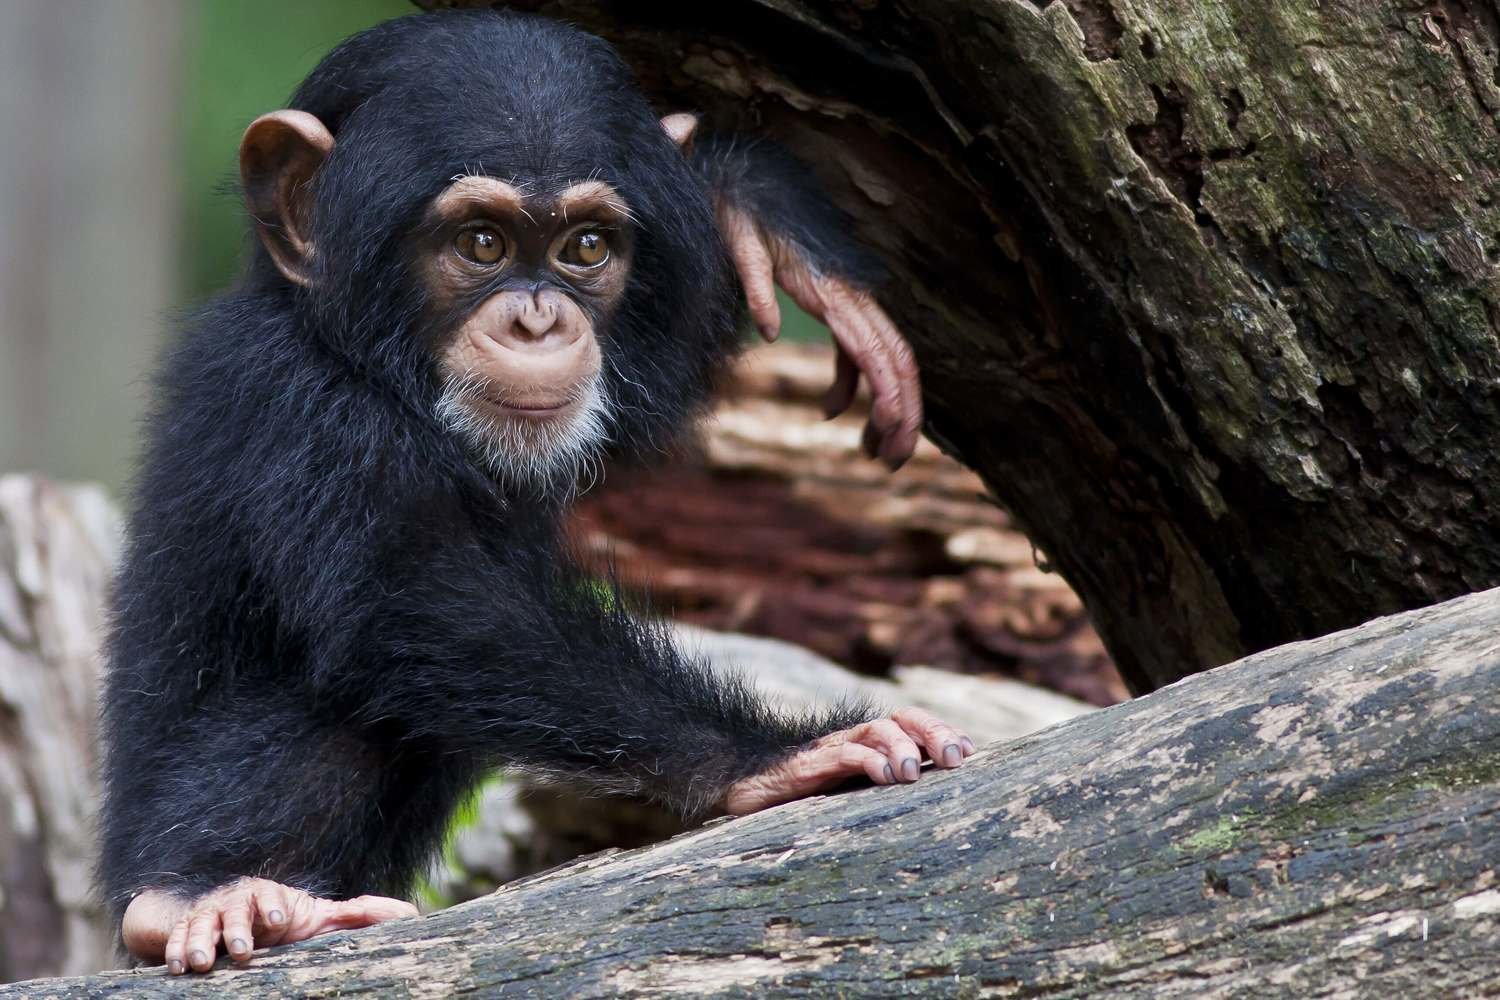 Adopt A Chimpanzee